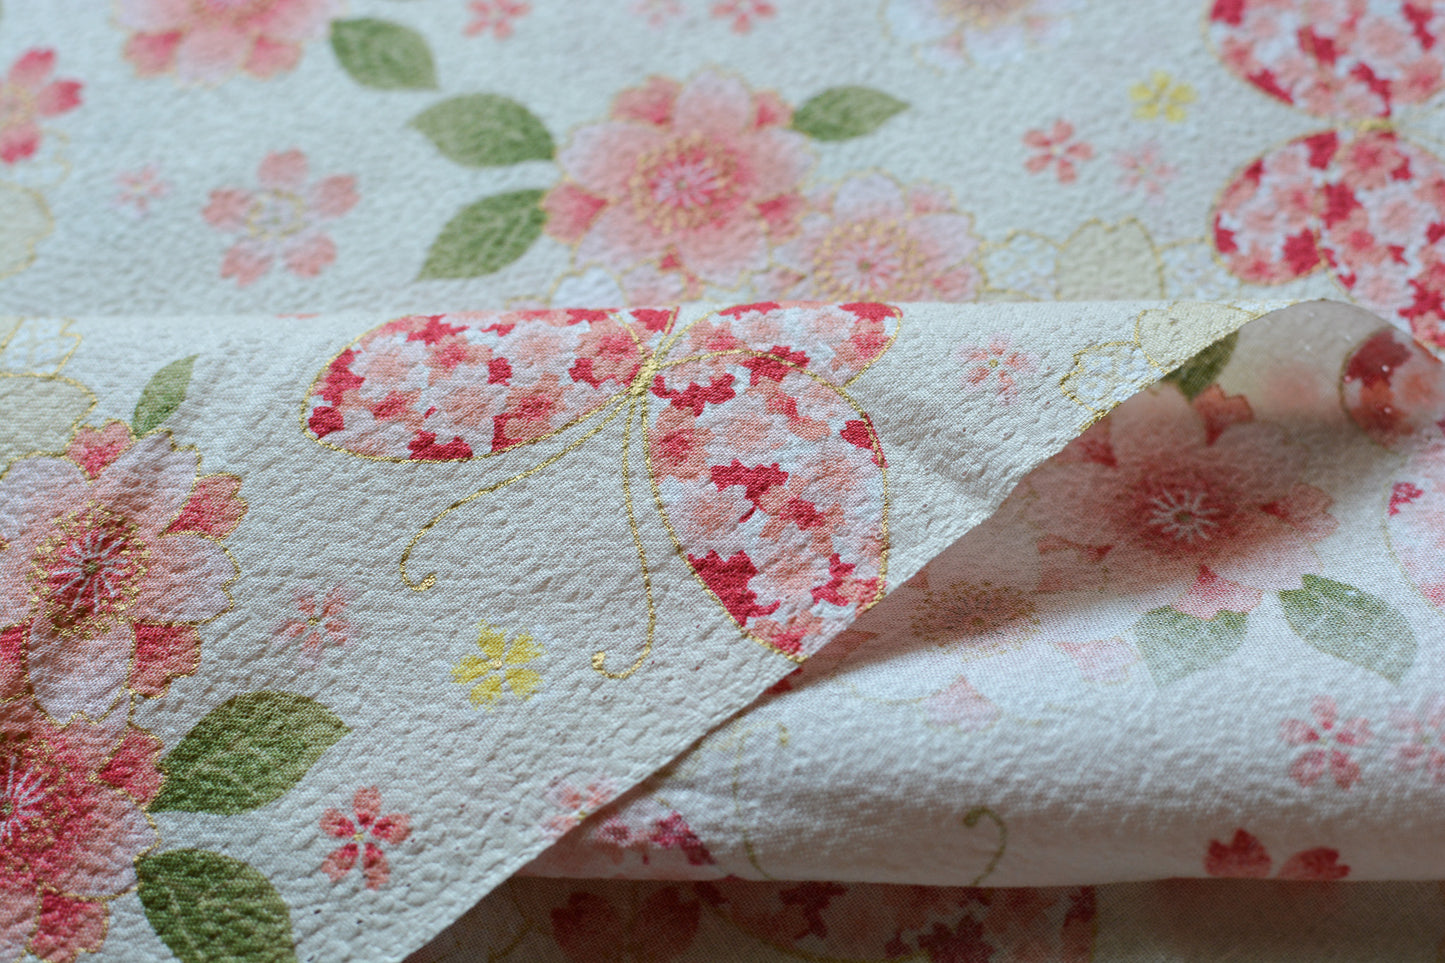 Sakura and Butterfly Cream Japanese Fabric